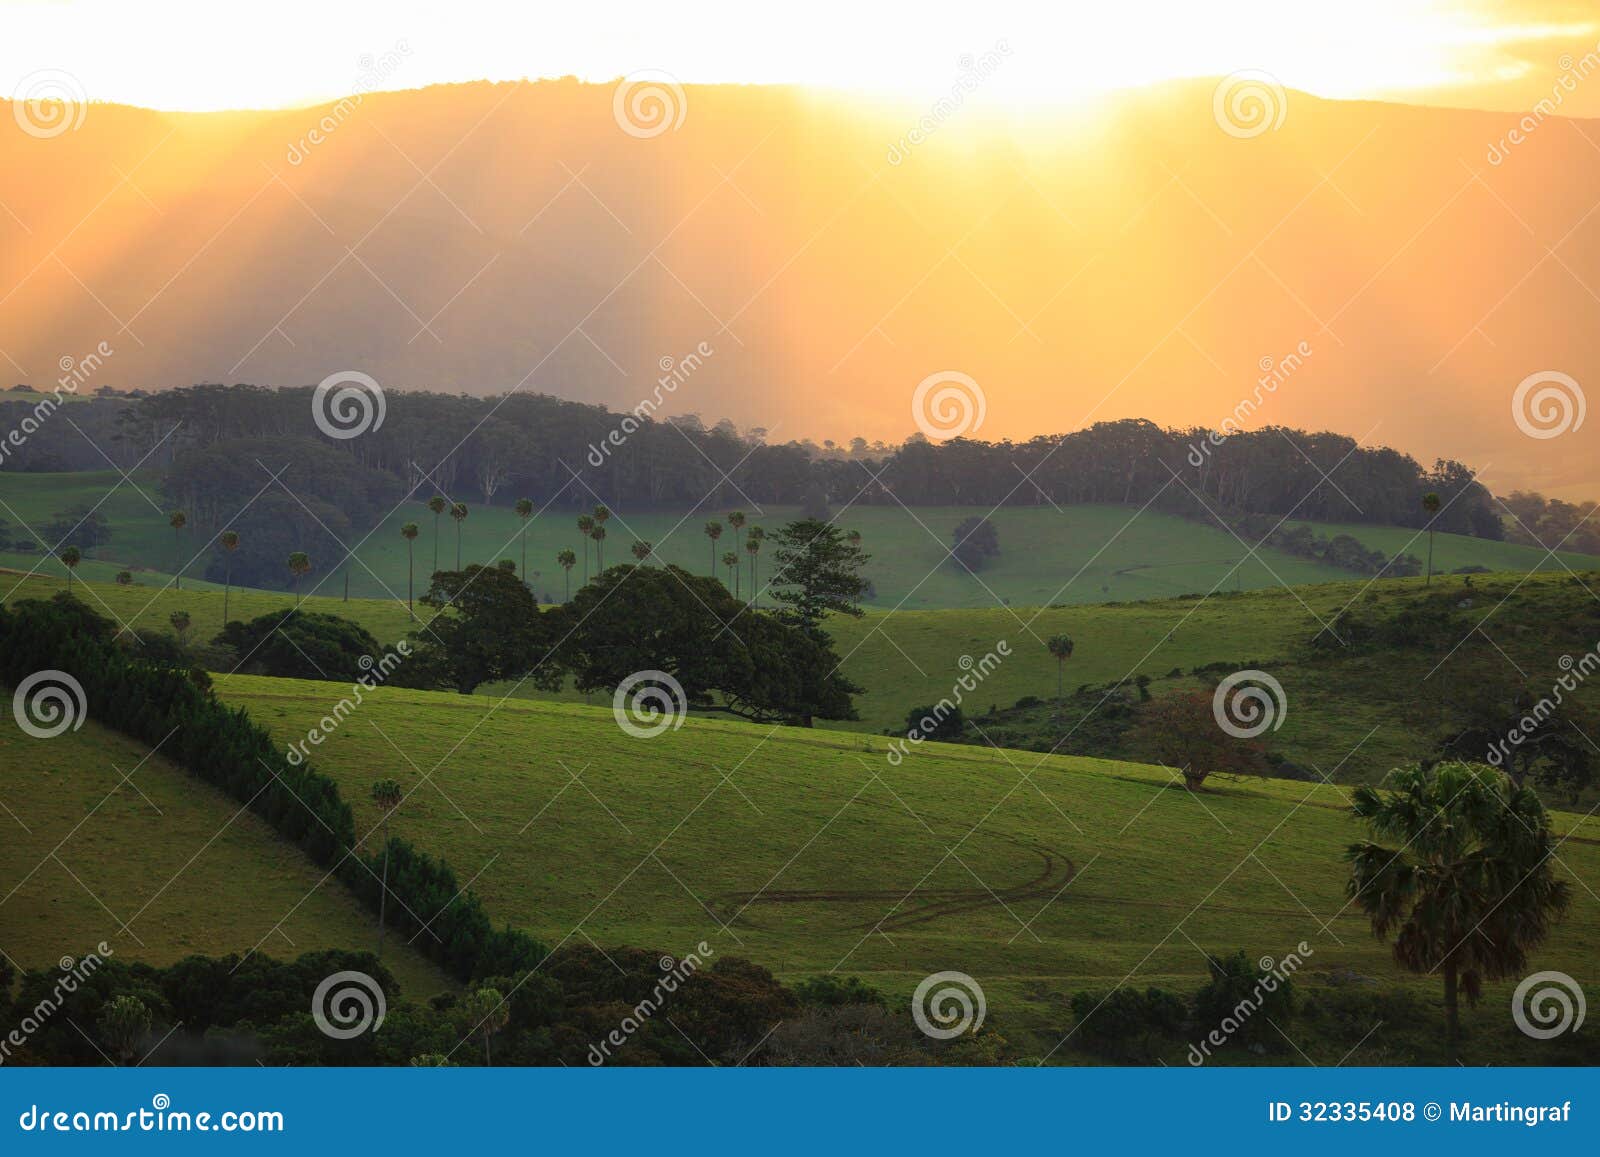 sunbeams over green hills landscape by golden sky in australia